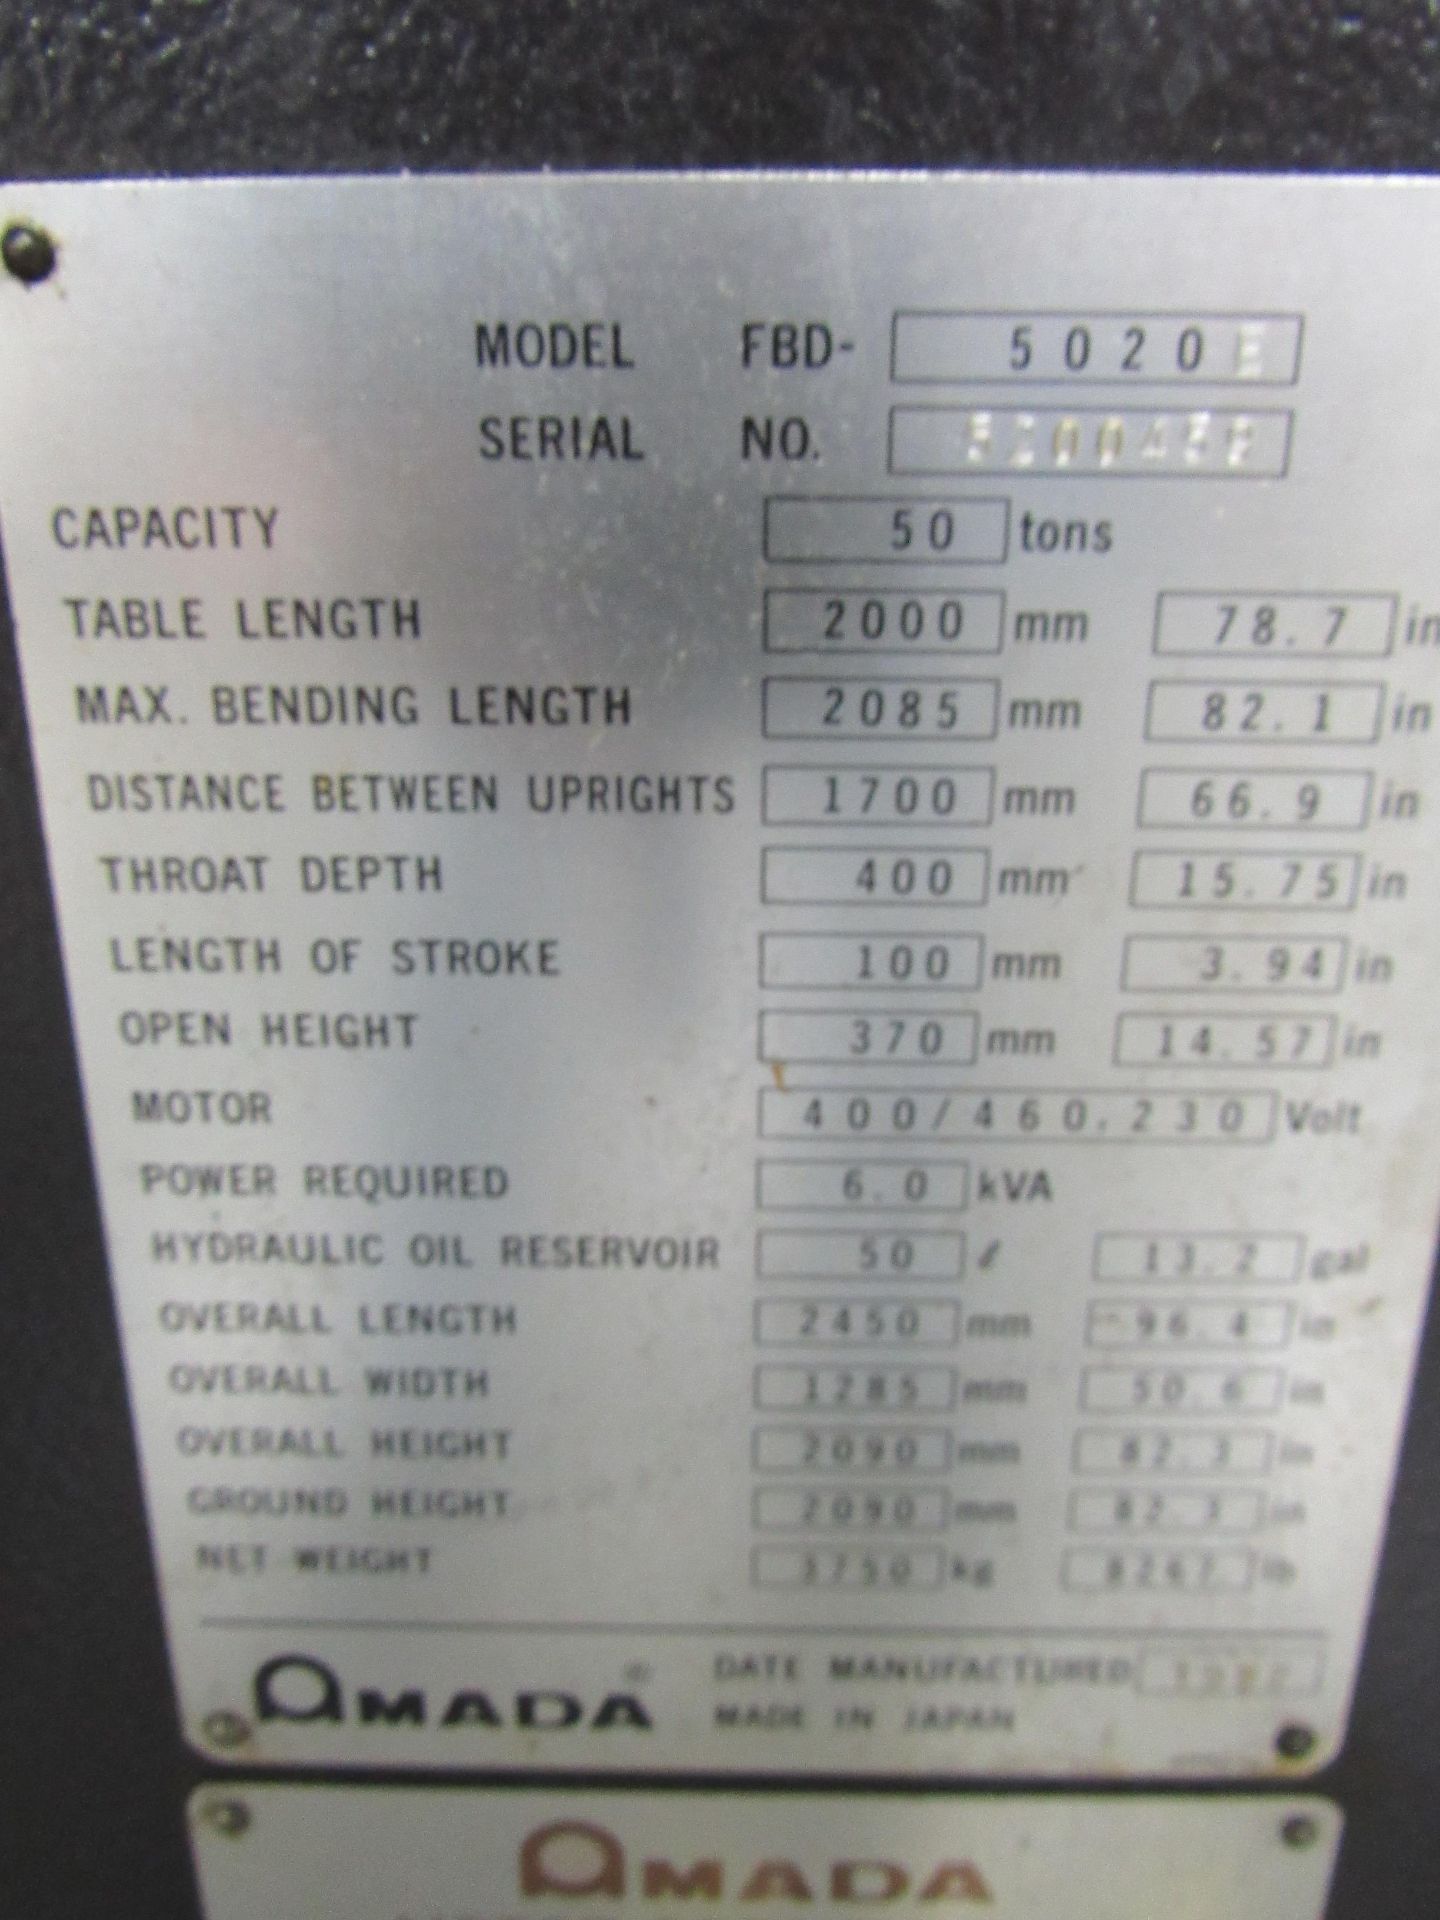 55 Ton x 78.74” Amada FBD5020E Press Brake - Image 7 of 7